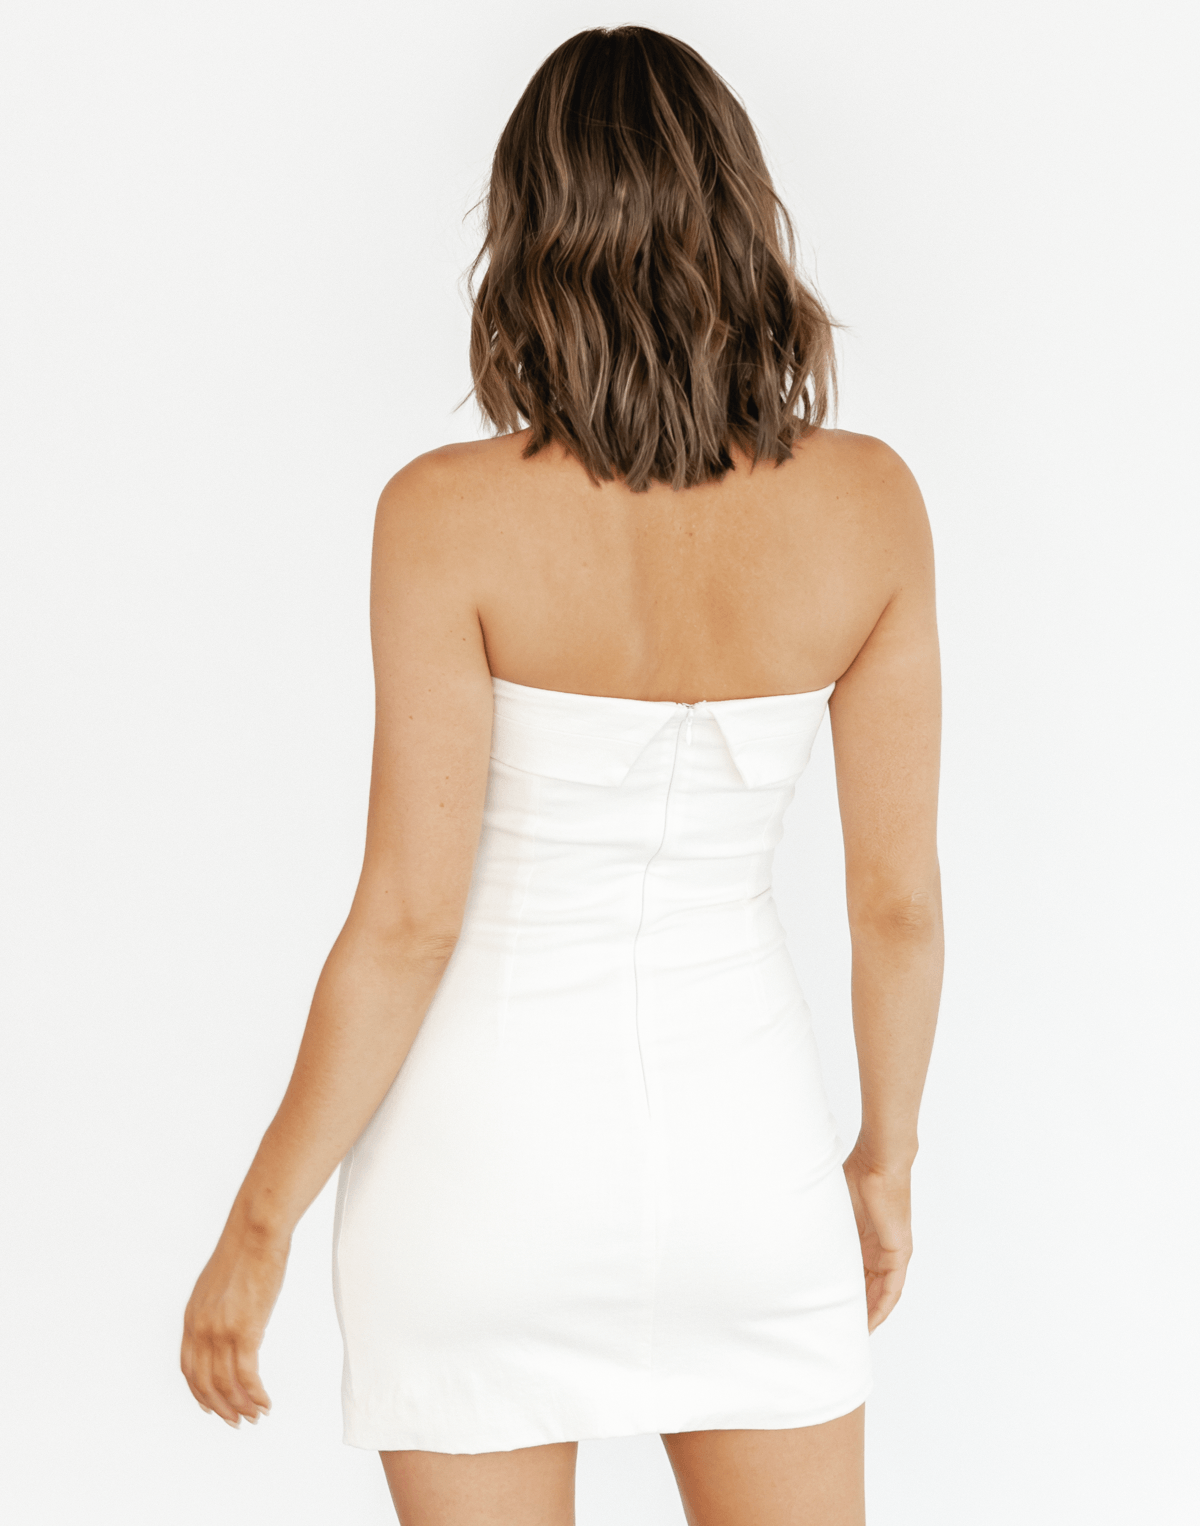 Natalee Mini Dress (White) - Strapless Summer Mini Dress - Women's Dress - Charcoal Clothing